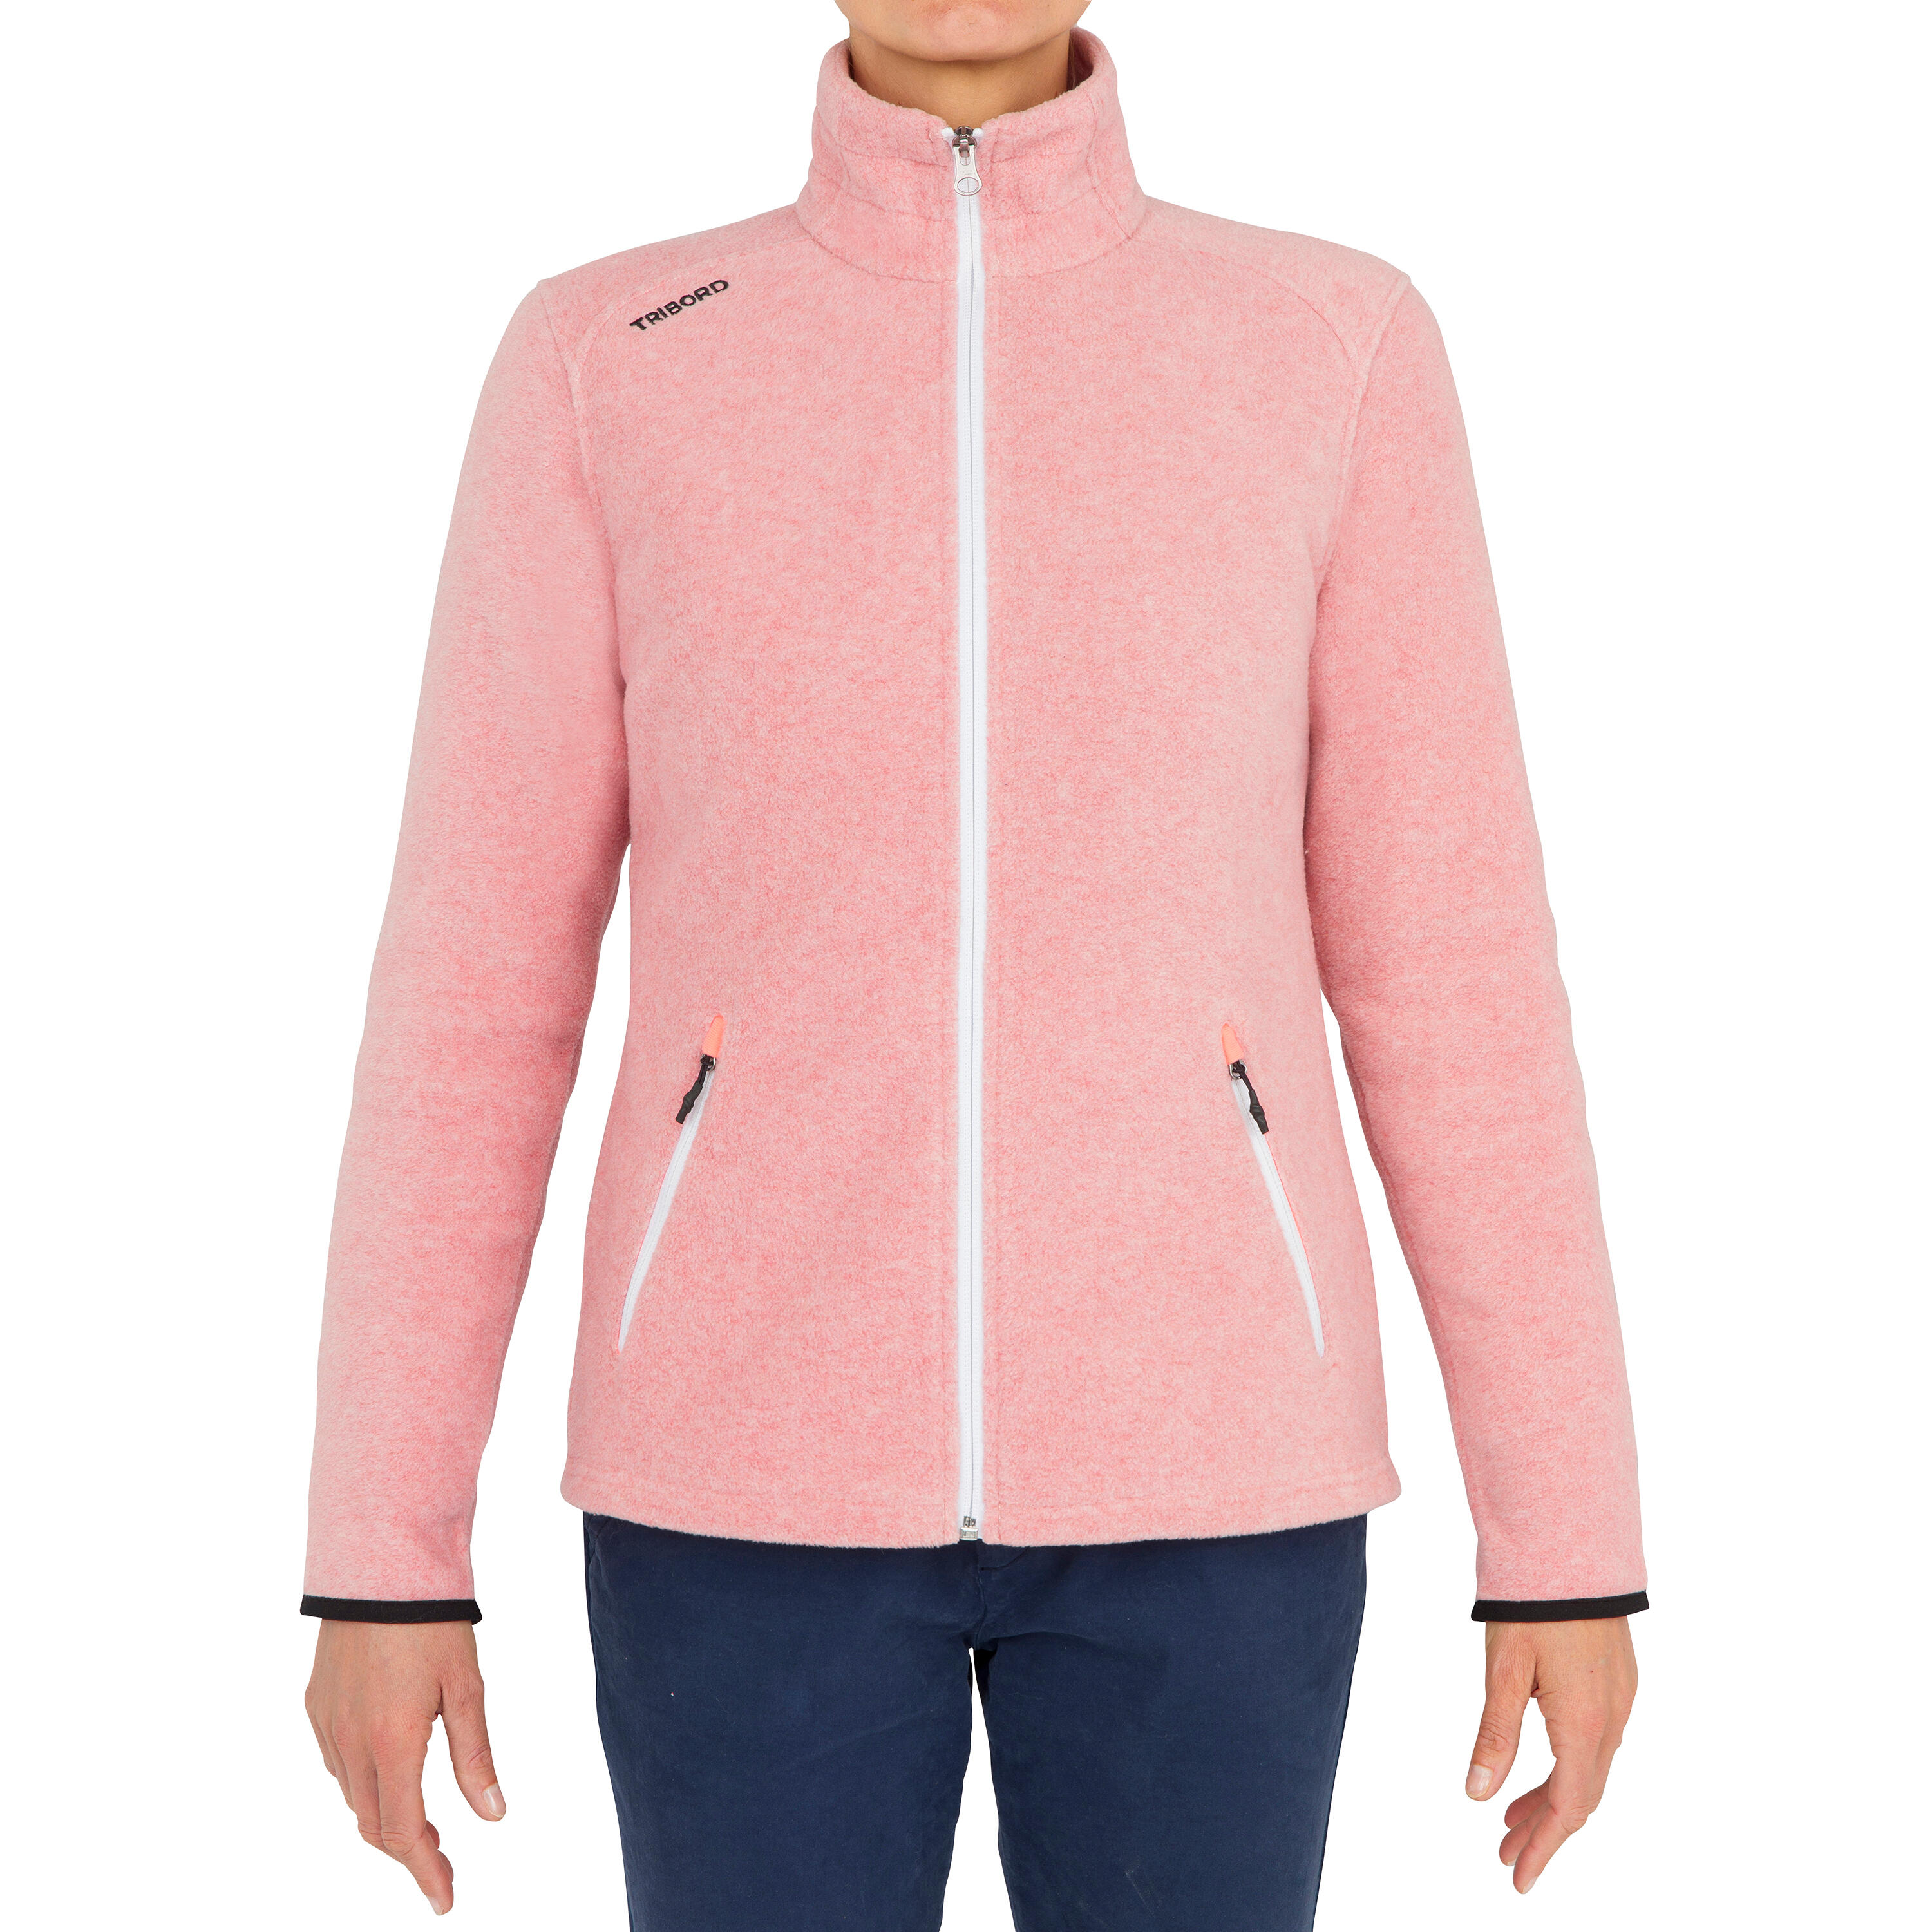 Women warm fleece sailing jacket 100 - Light rose 2/9